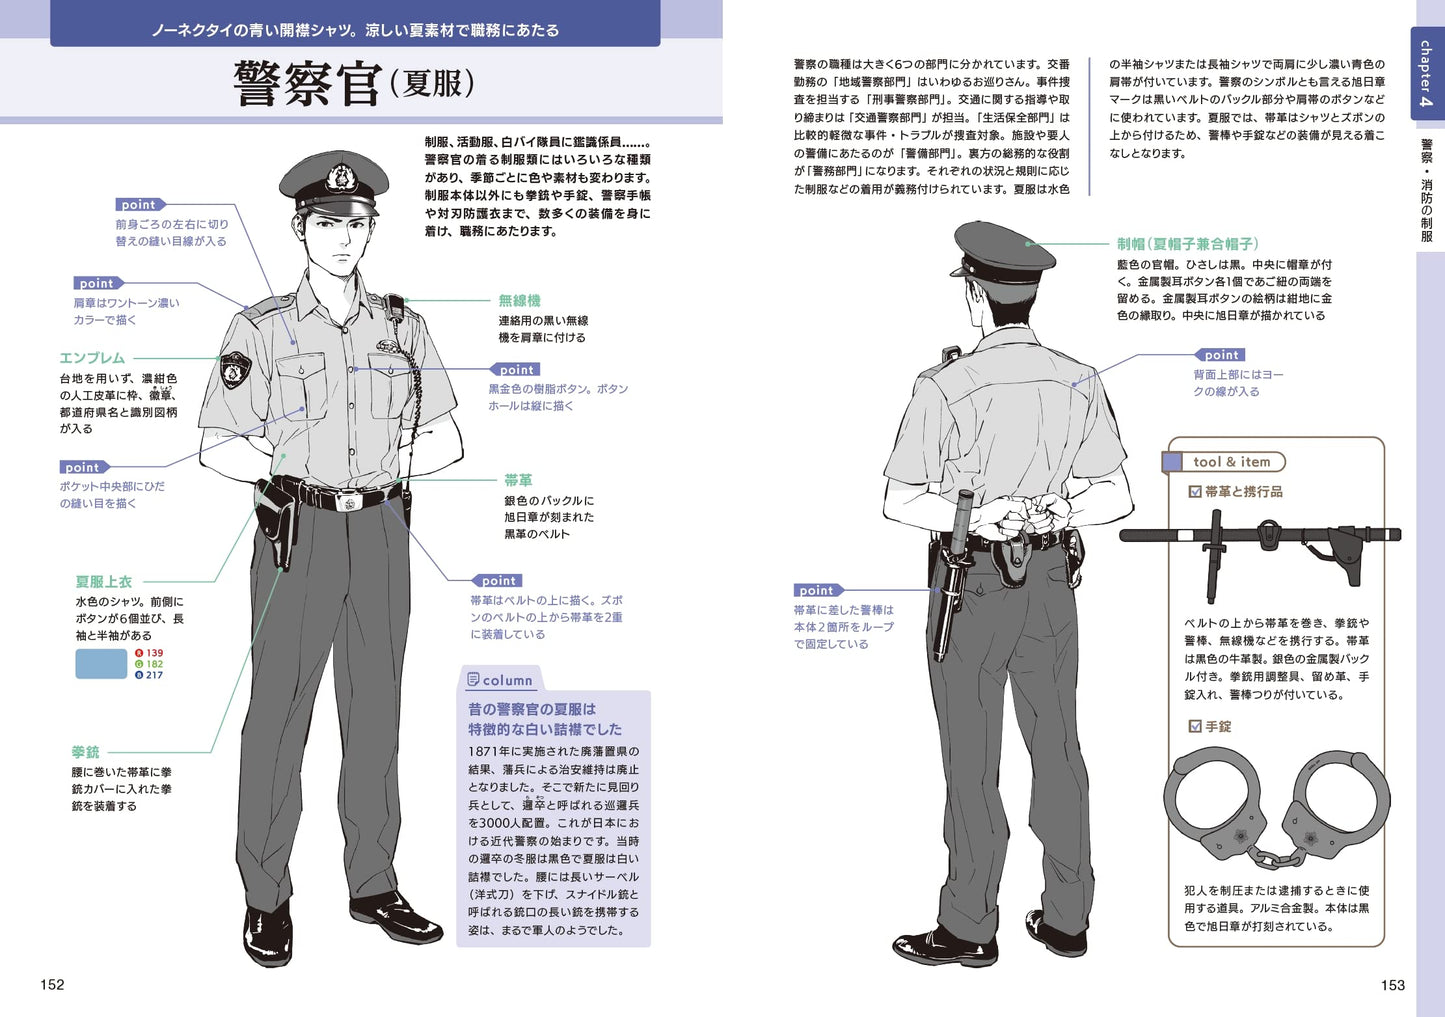 Digital Illustration "Working Uniform" Encyclopedia